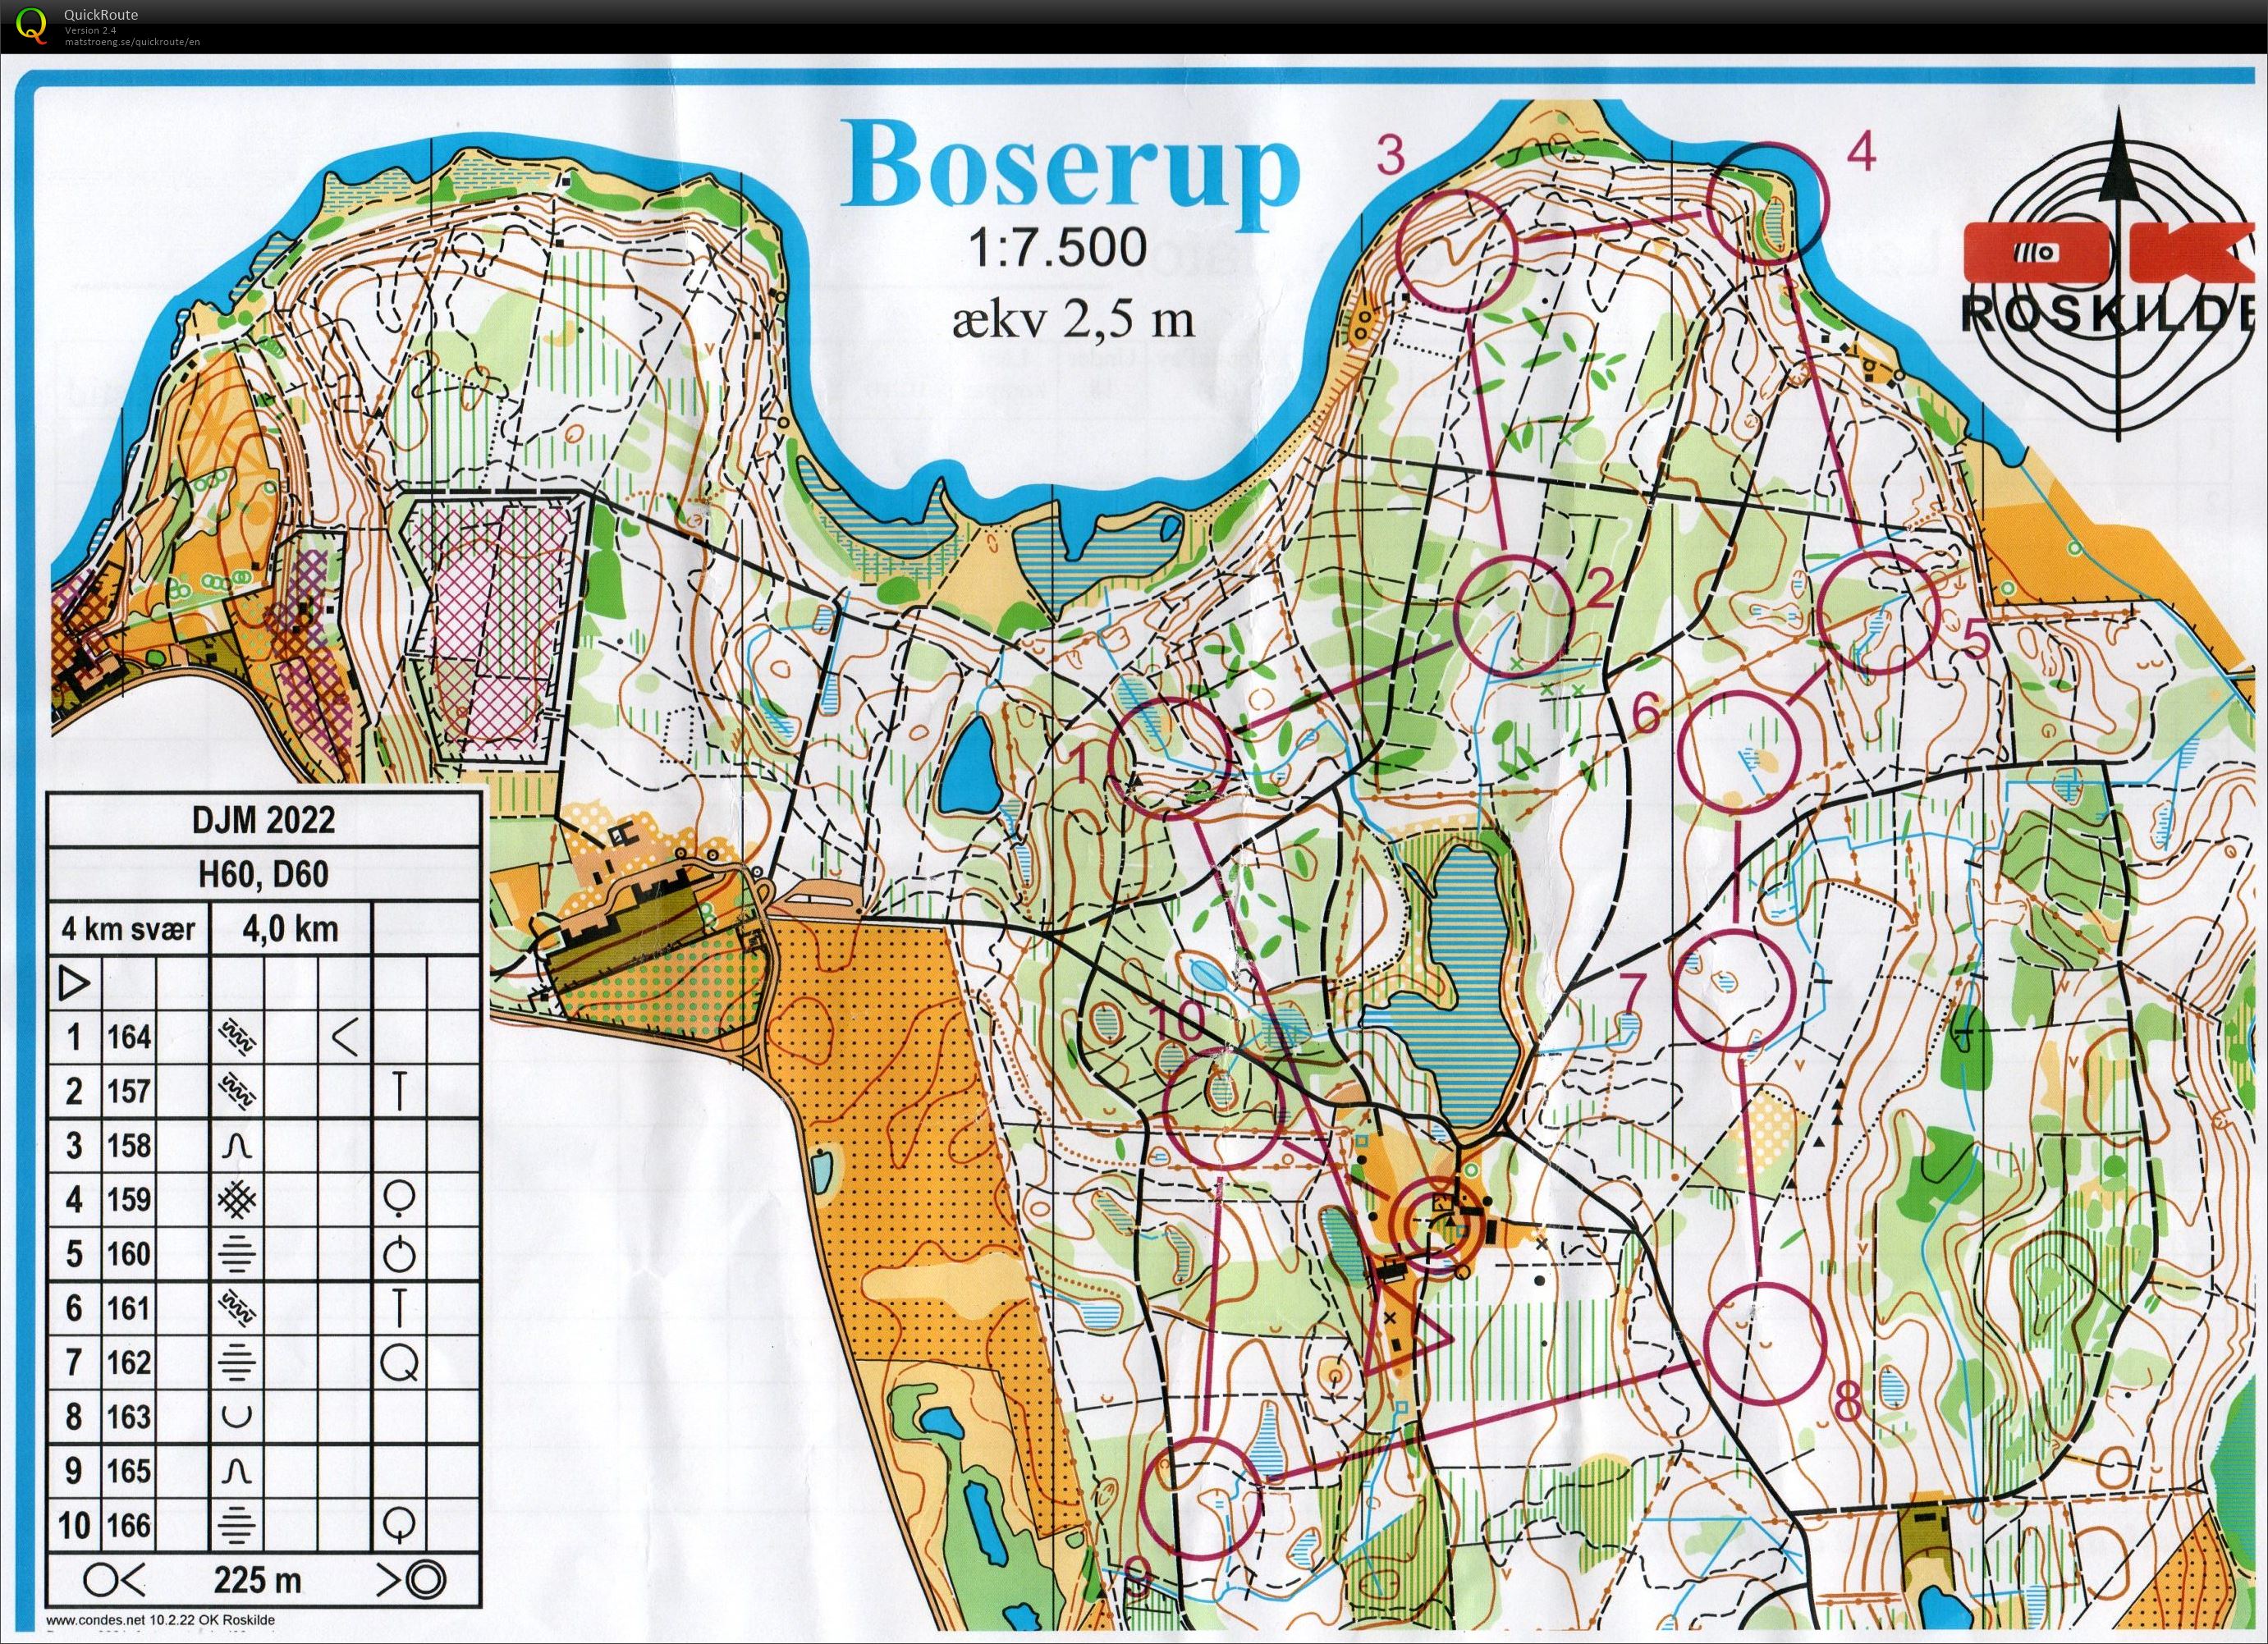 Lørdagsløb i Boserup (25-06-2022)